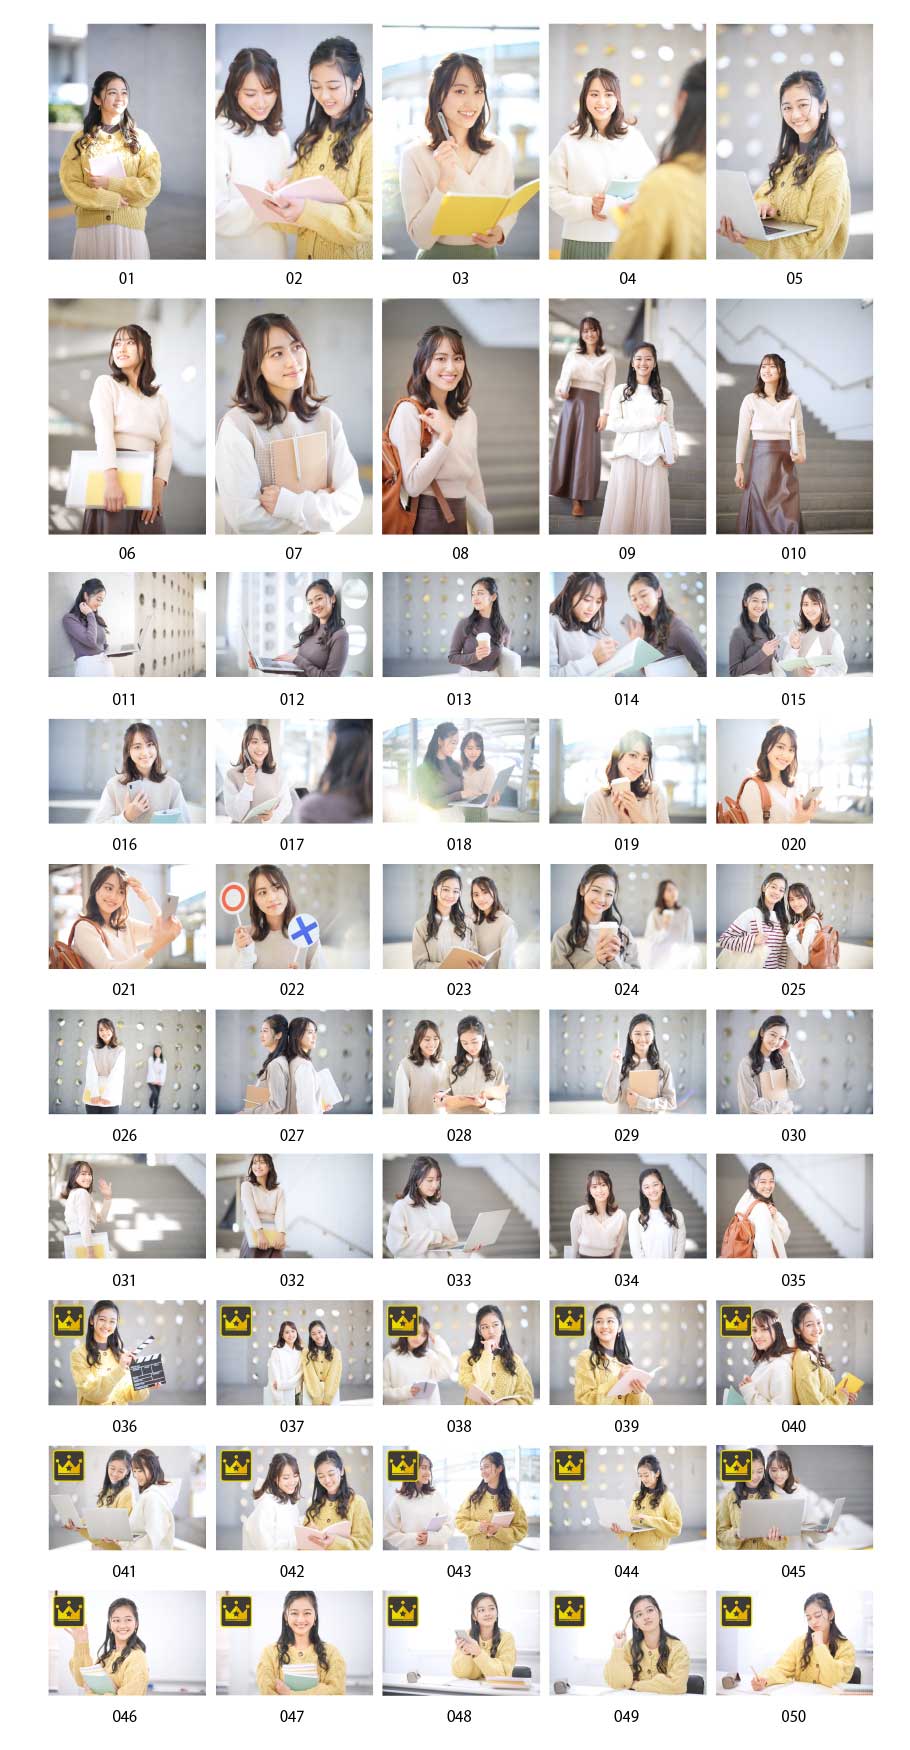 Japanese female college student photos